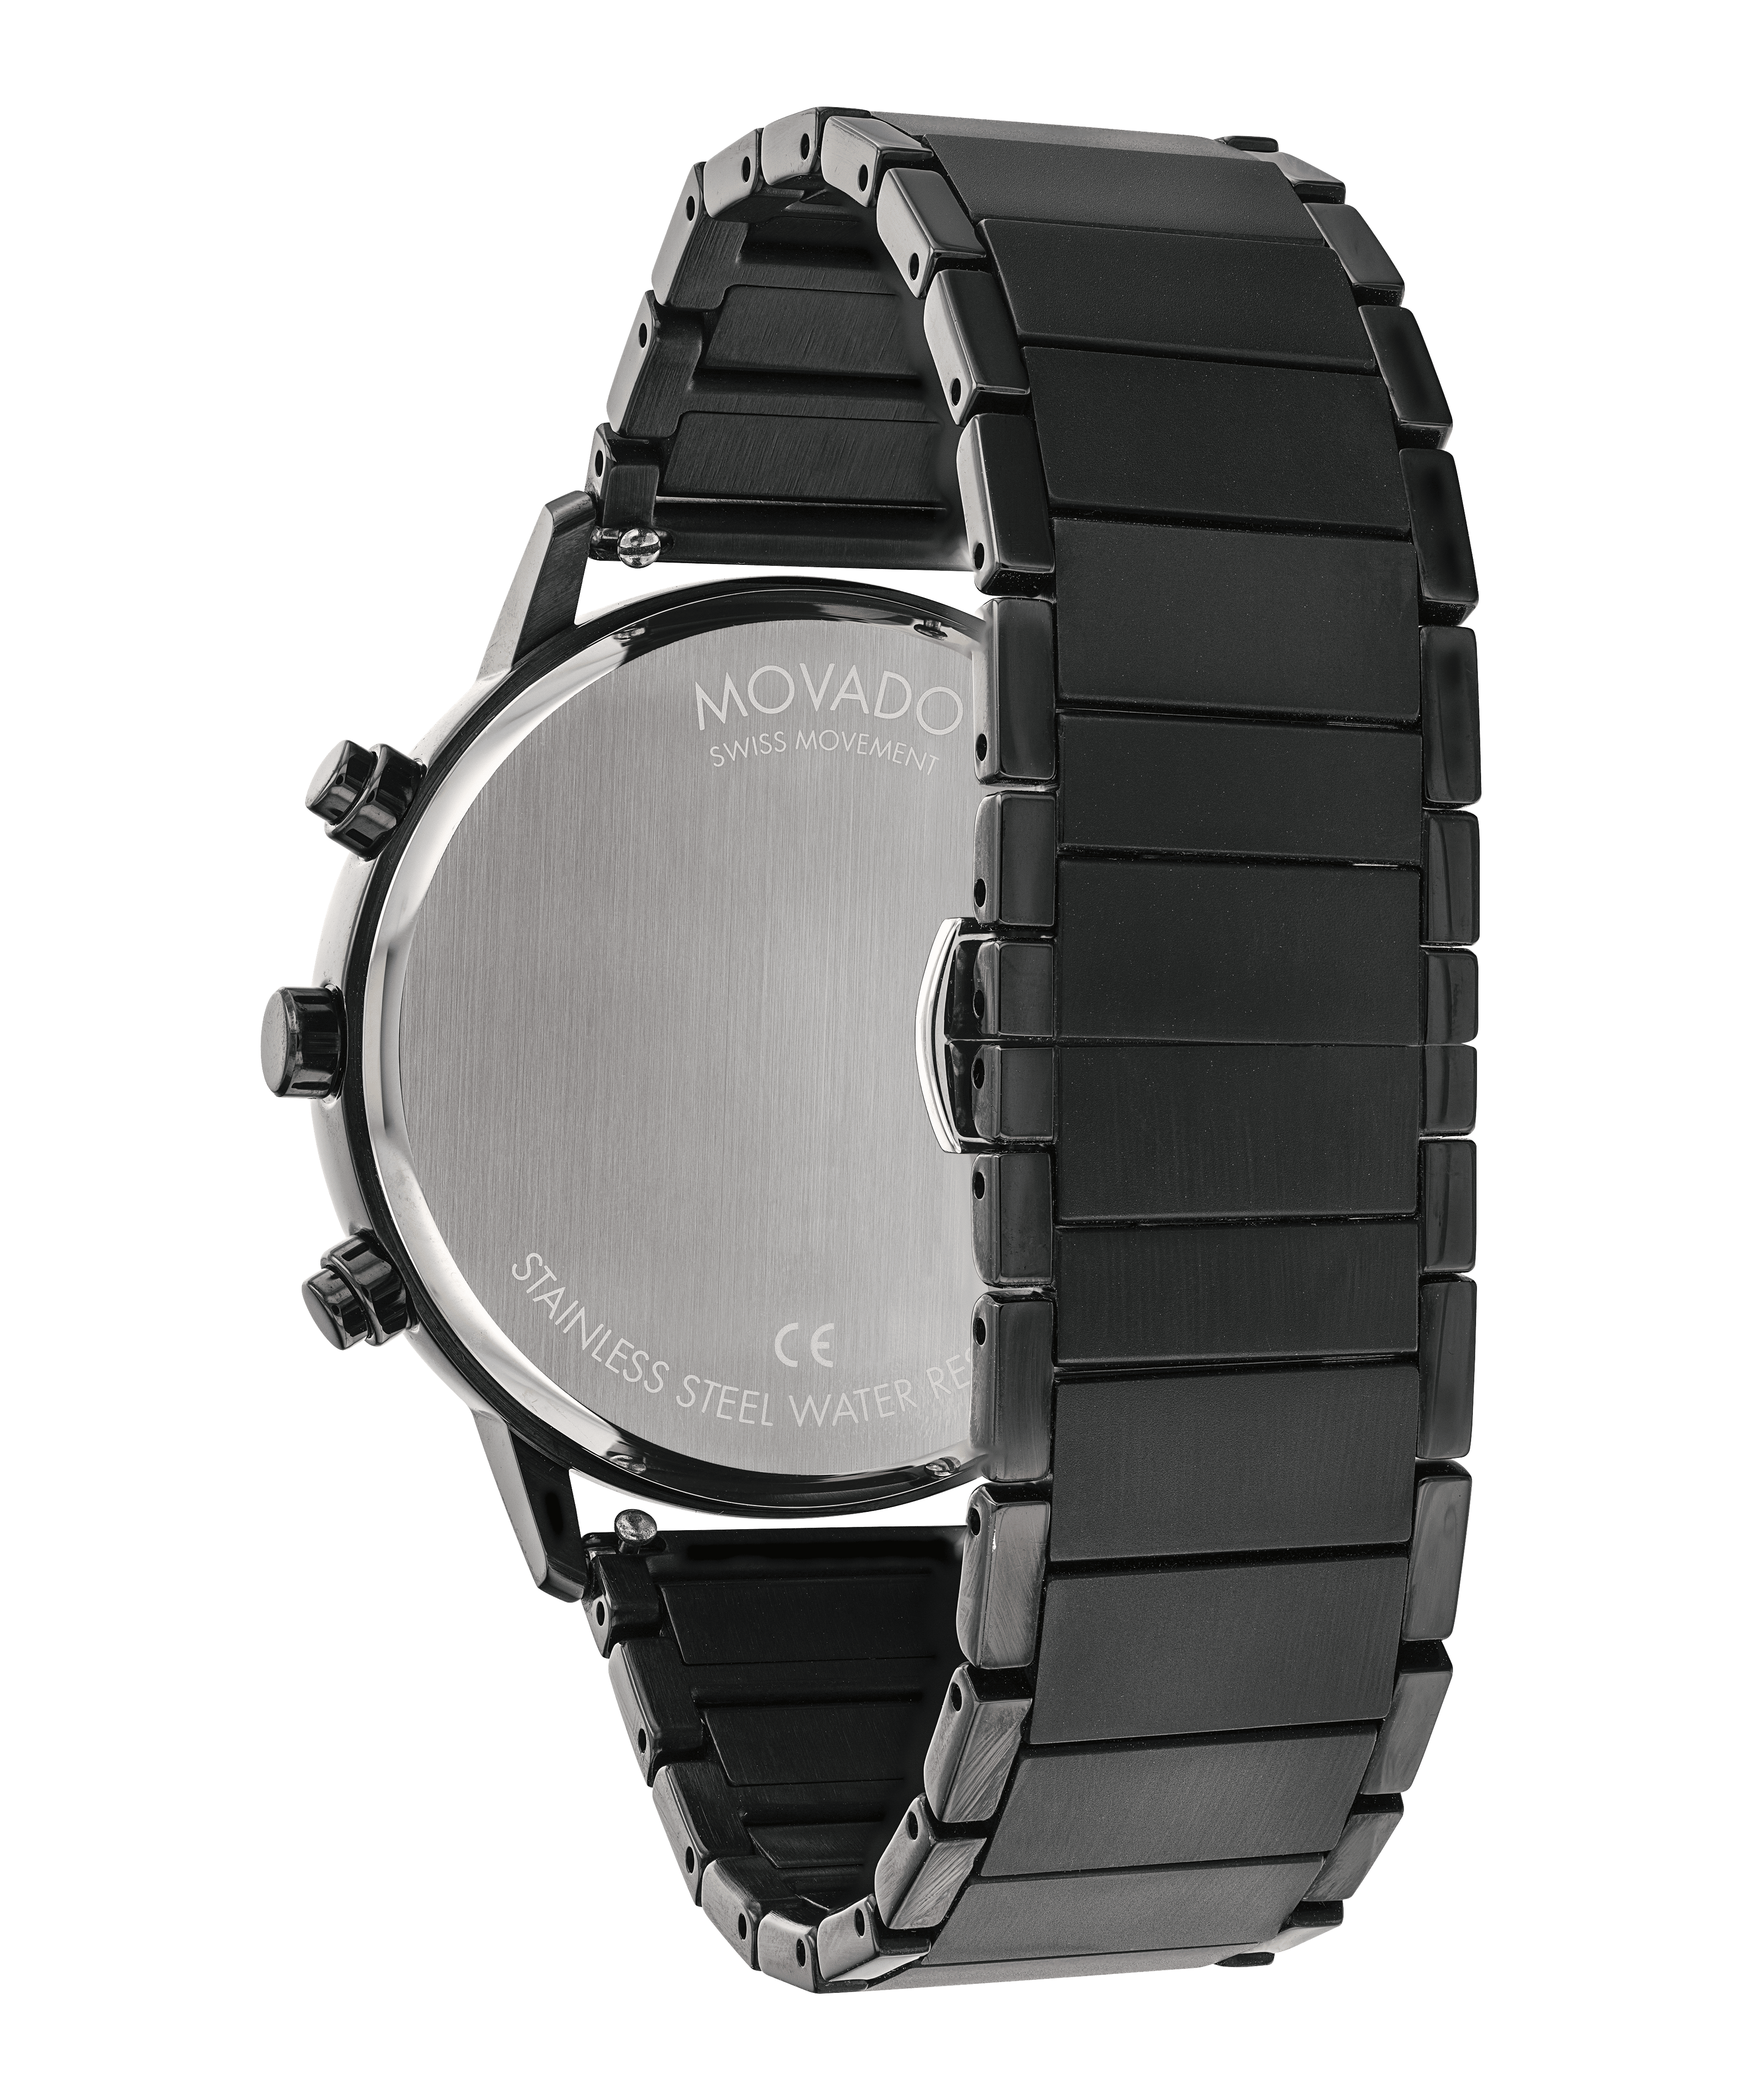 Movado Chronometre 1231 18k Yellow Gold 34mm Leather Automatic Wrist Watch